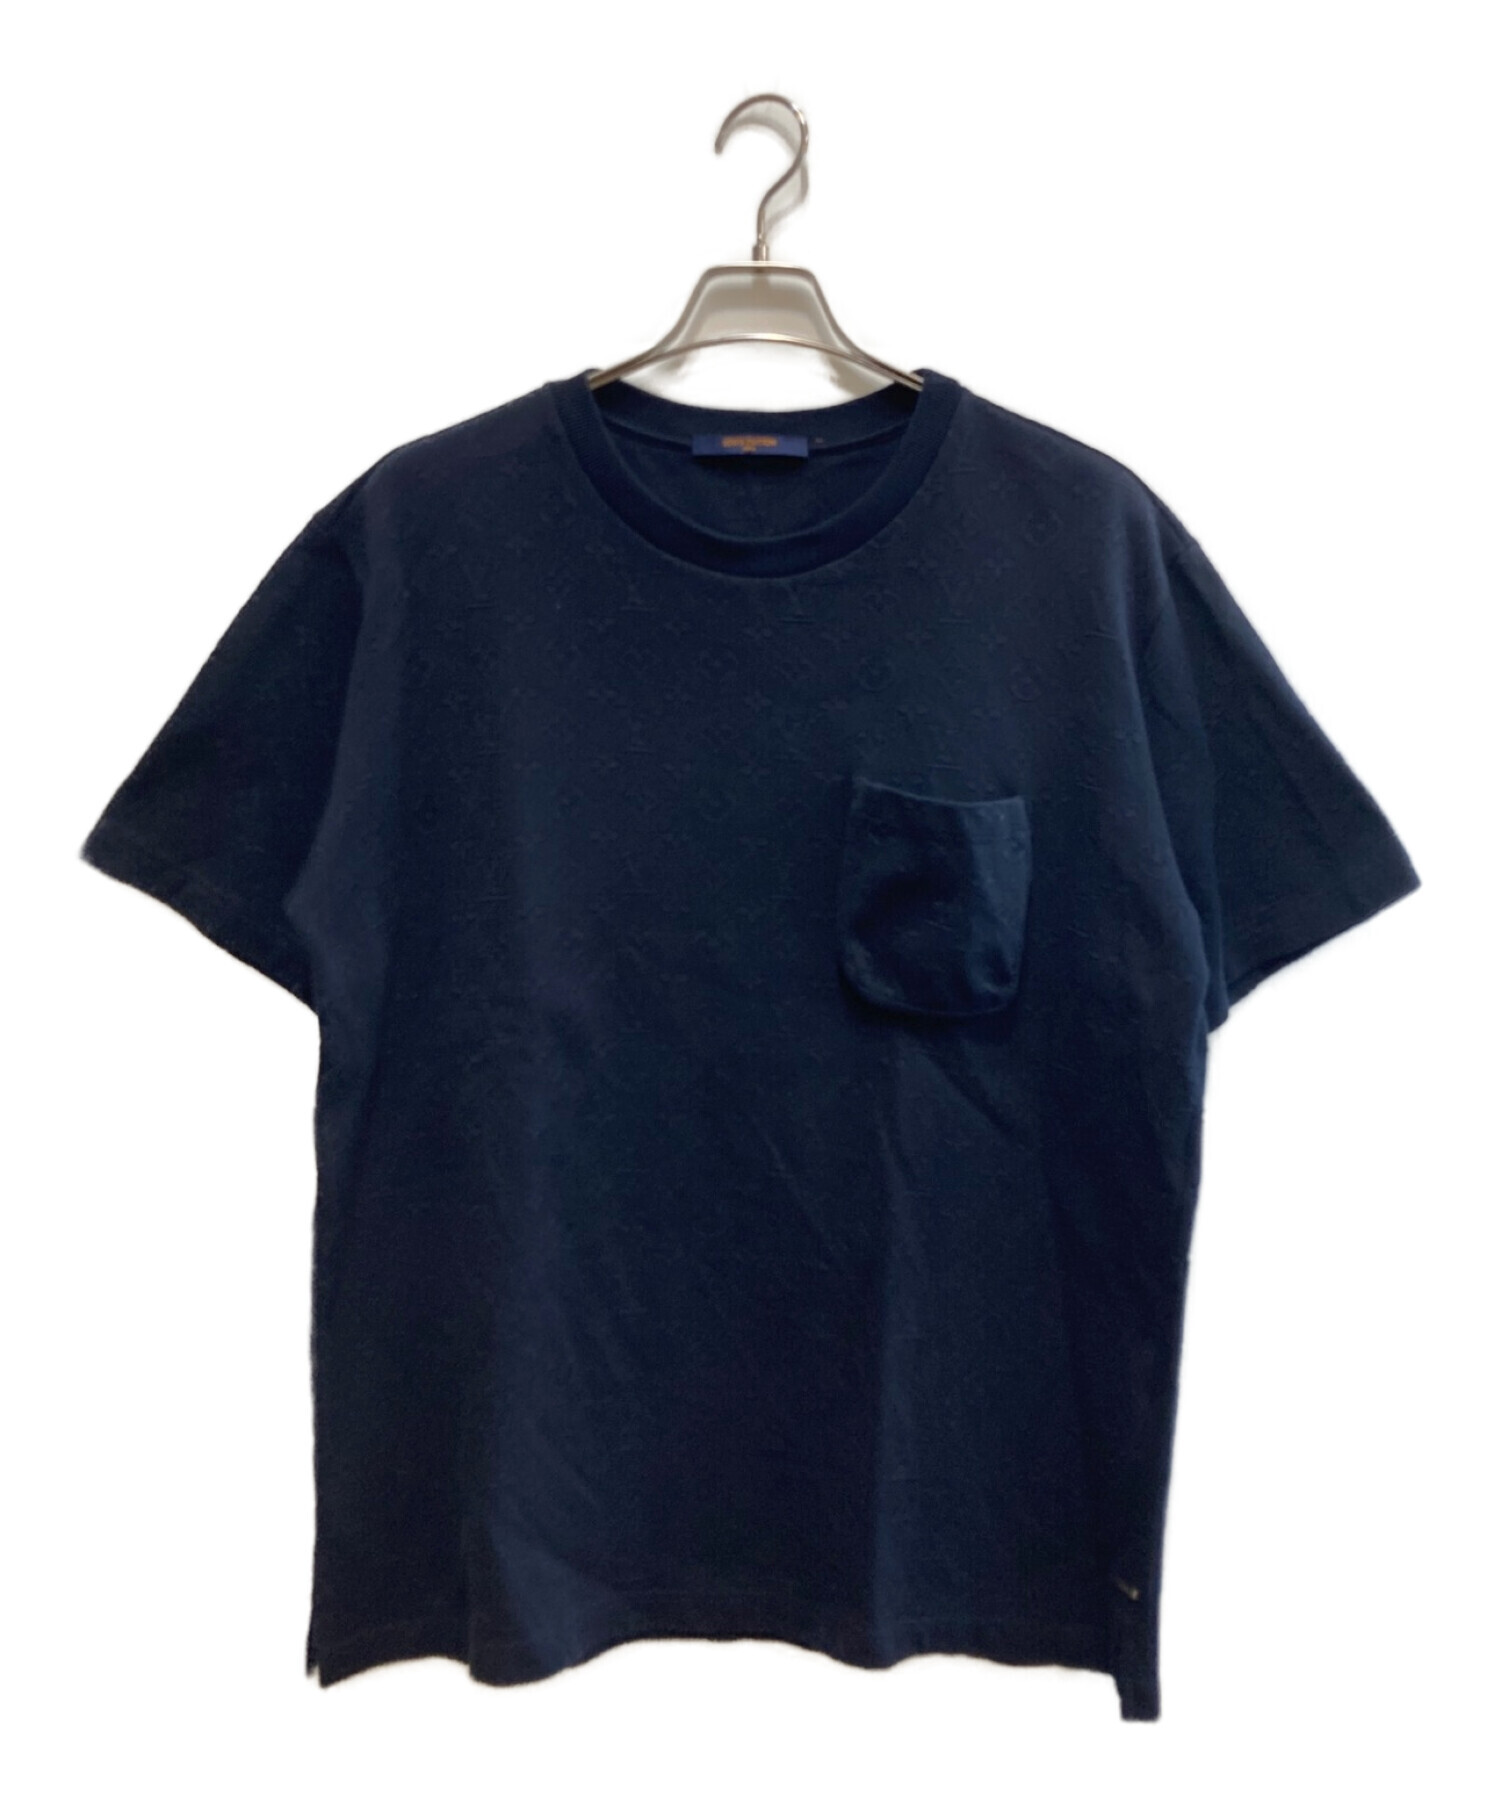 LOUIS VUITTON (ルイ ヴィトン) シグネチャー3DポケットモノグラムTシャツ ネイビー サイズ:XL